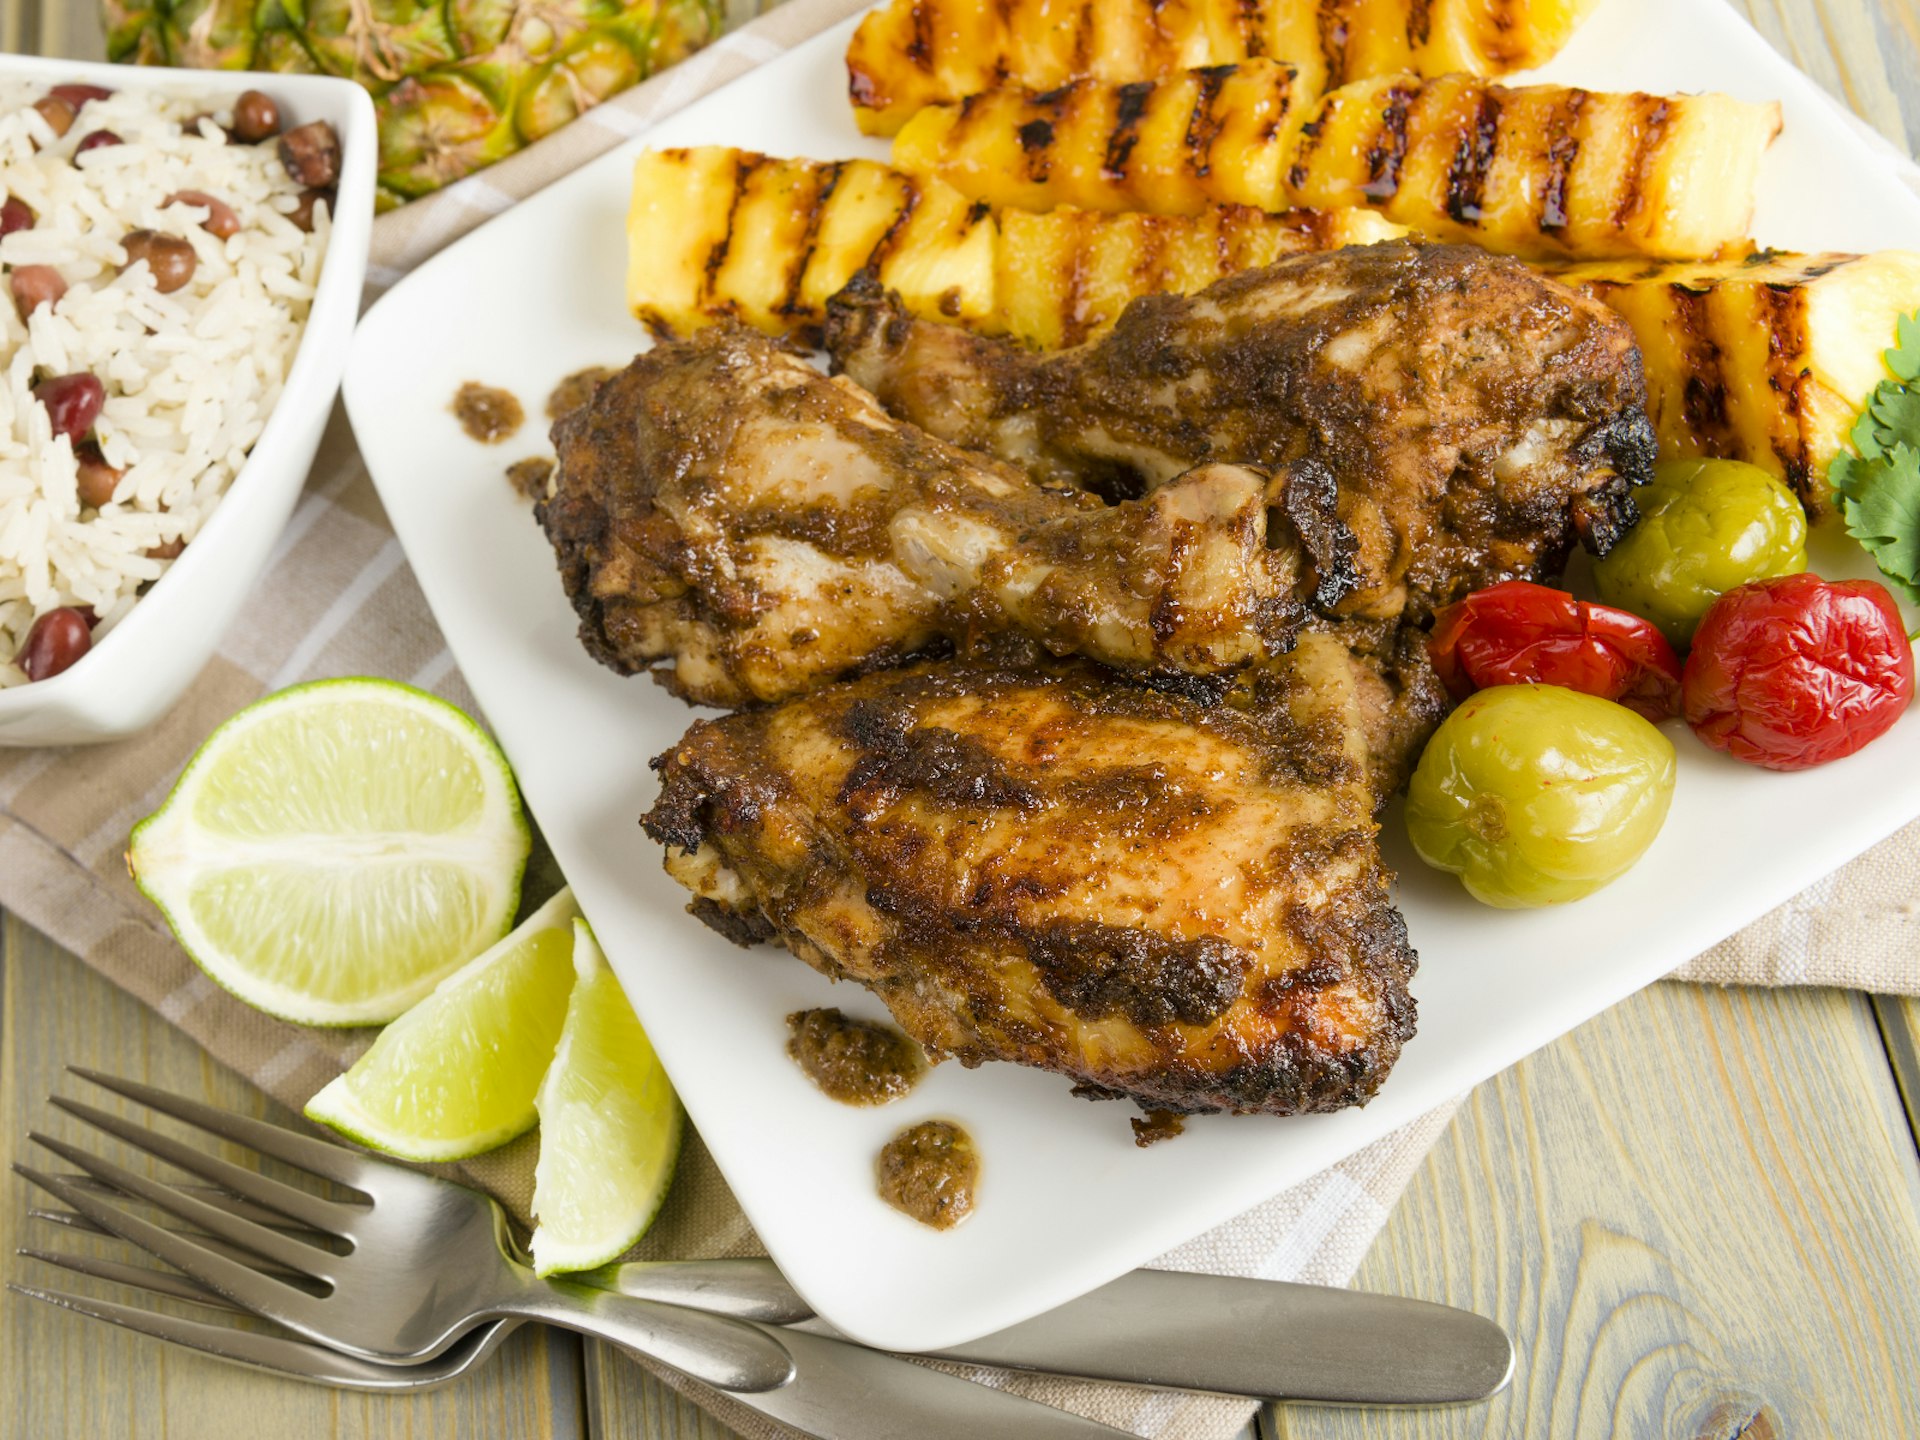 Jamaican jerk chicken is popular across the Cayman Islands © Paul Brighton / Shutterstock